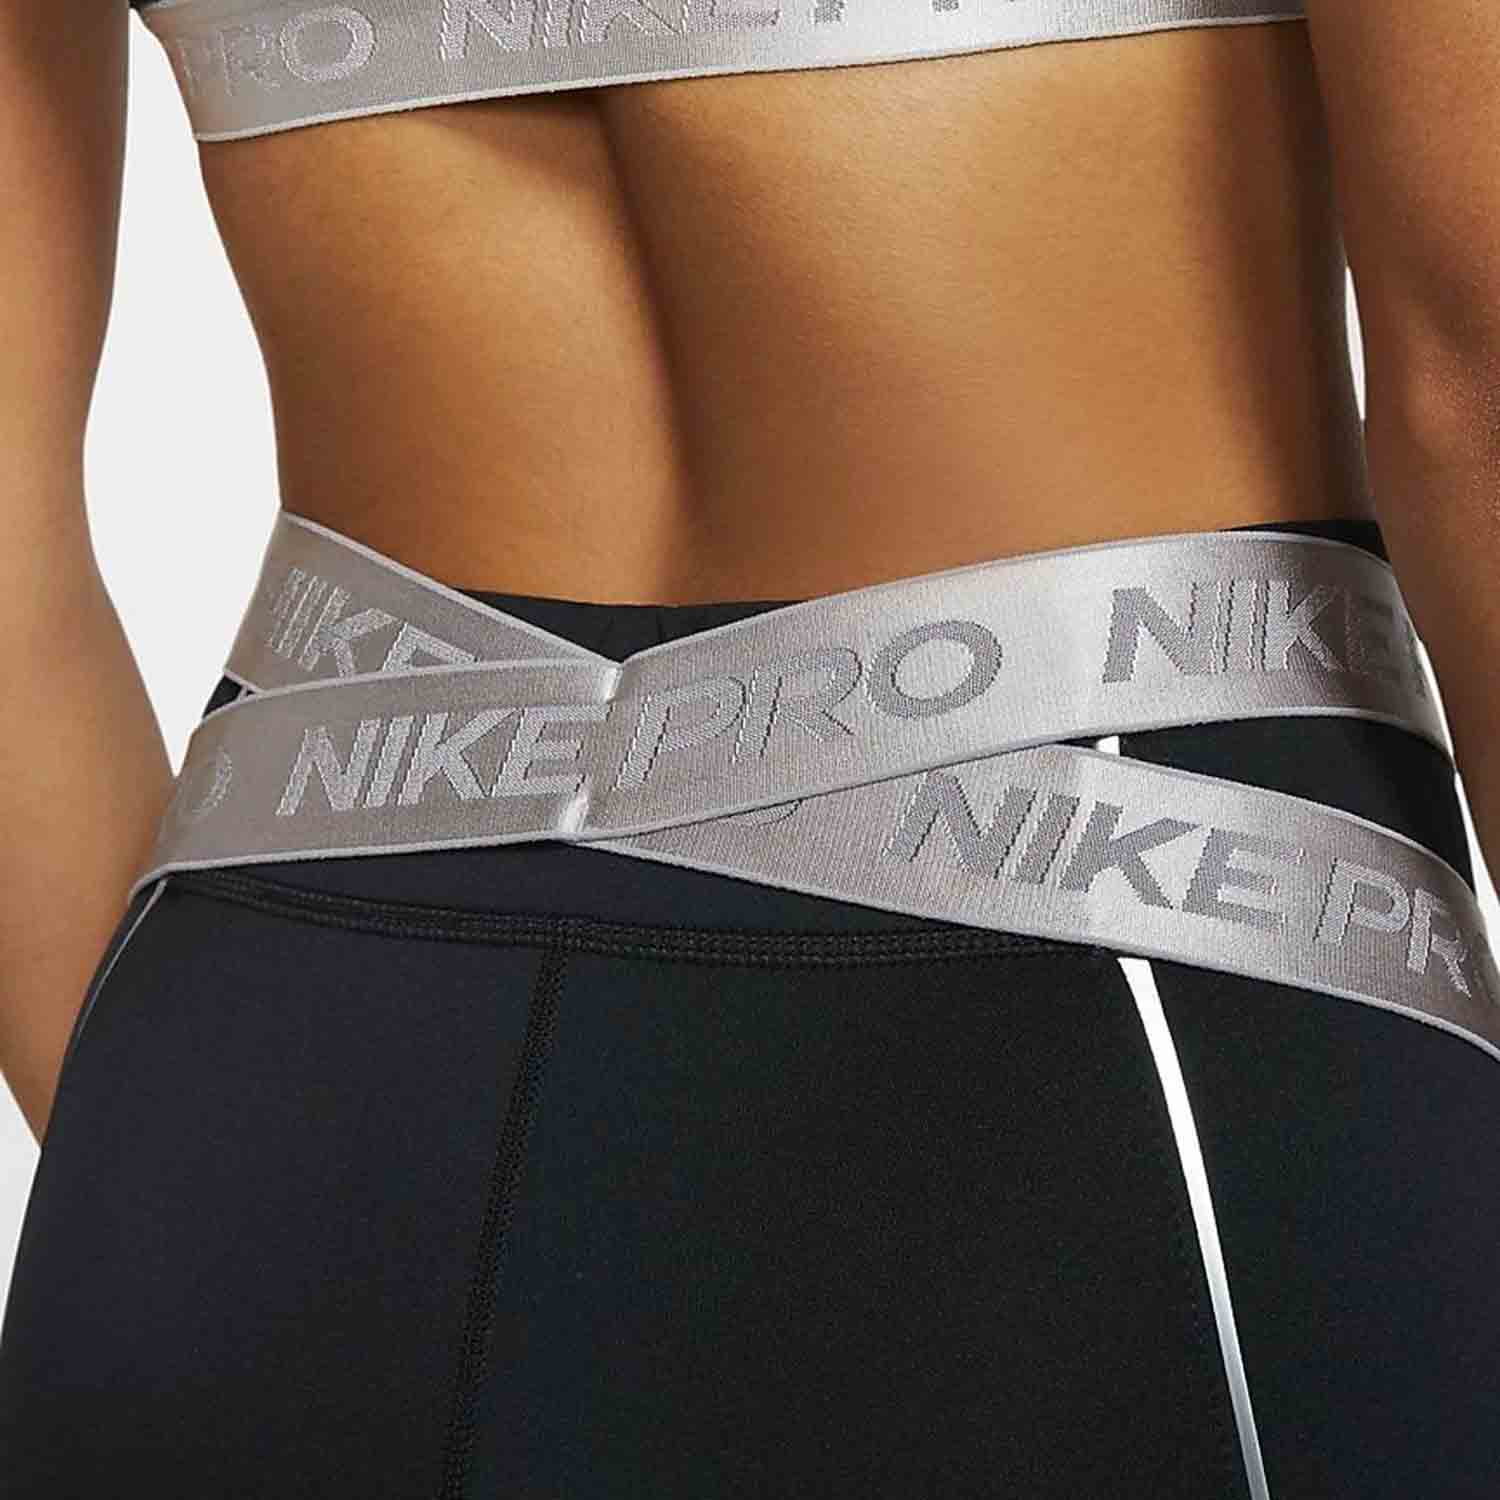 Nike, Pants & Jumpsuits, Nike Pro Hyperwarm Leggings Bundle Size Xs